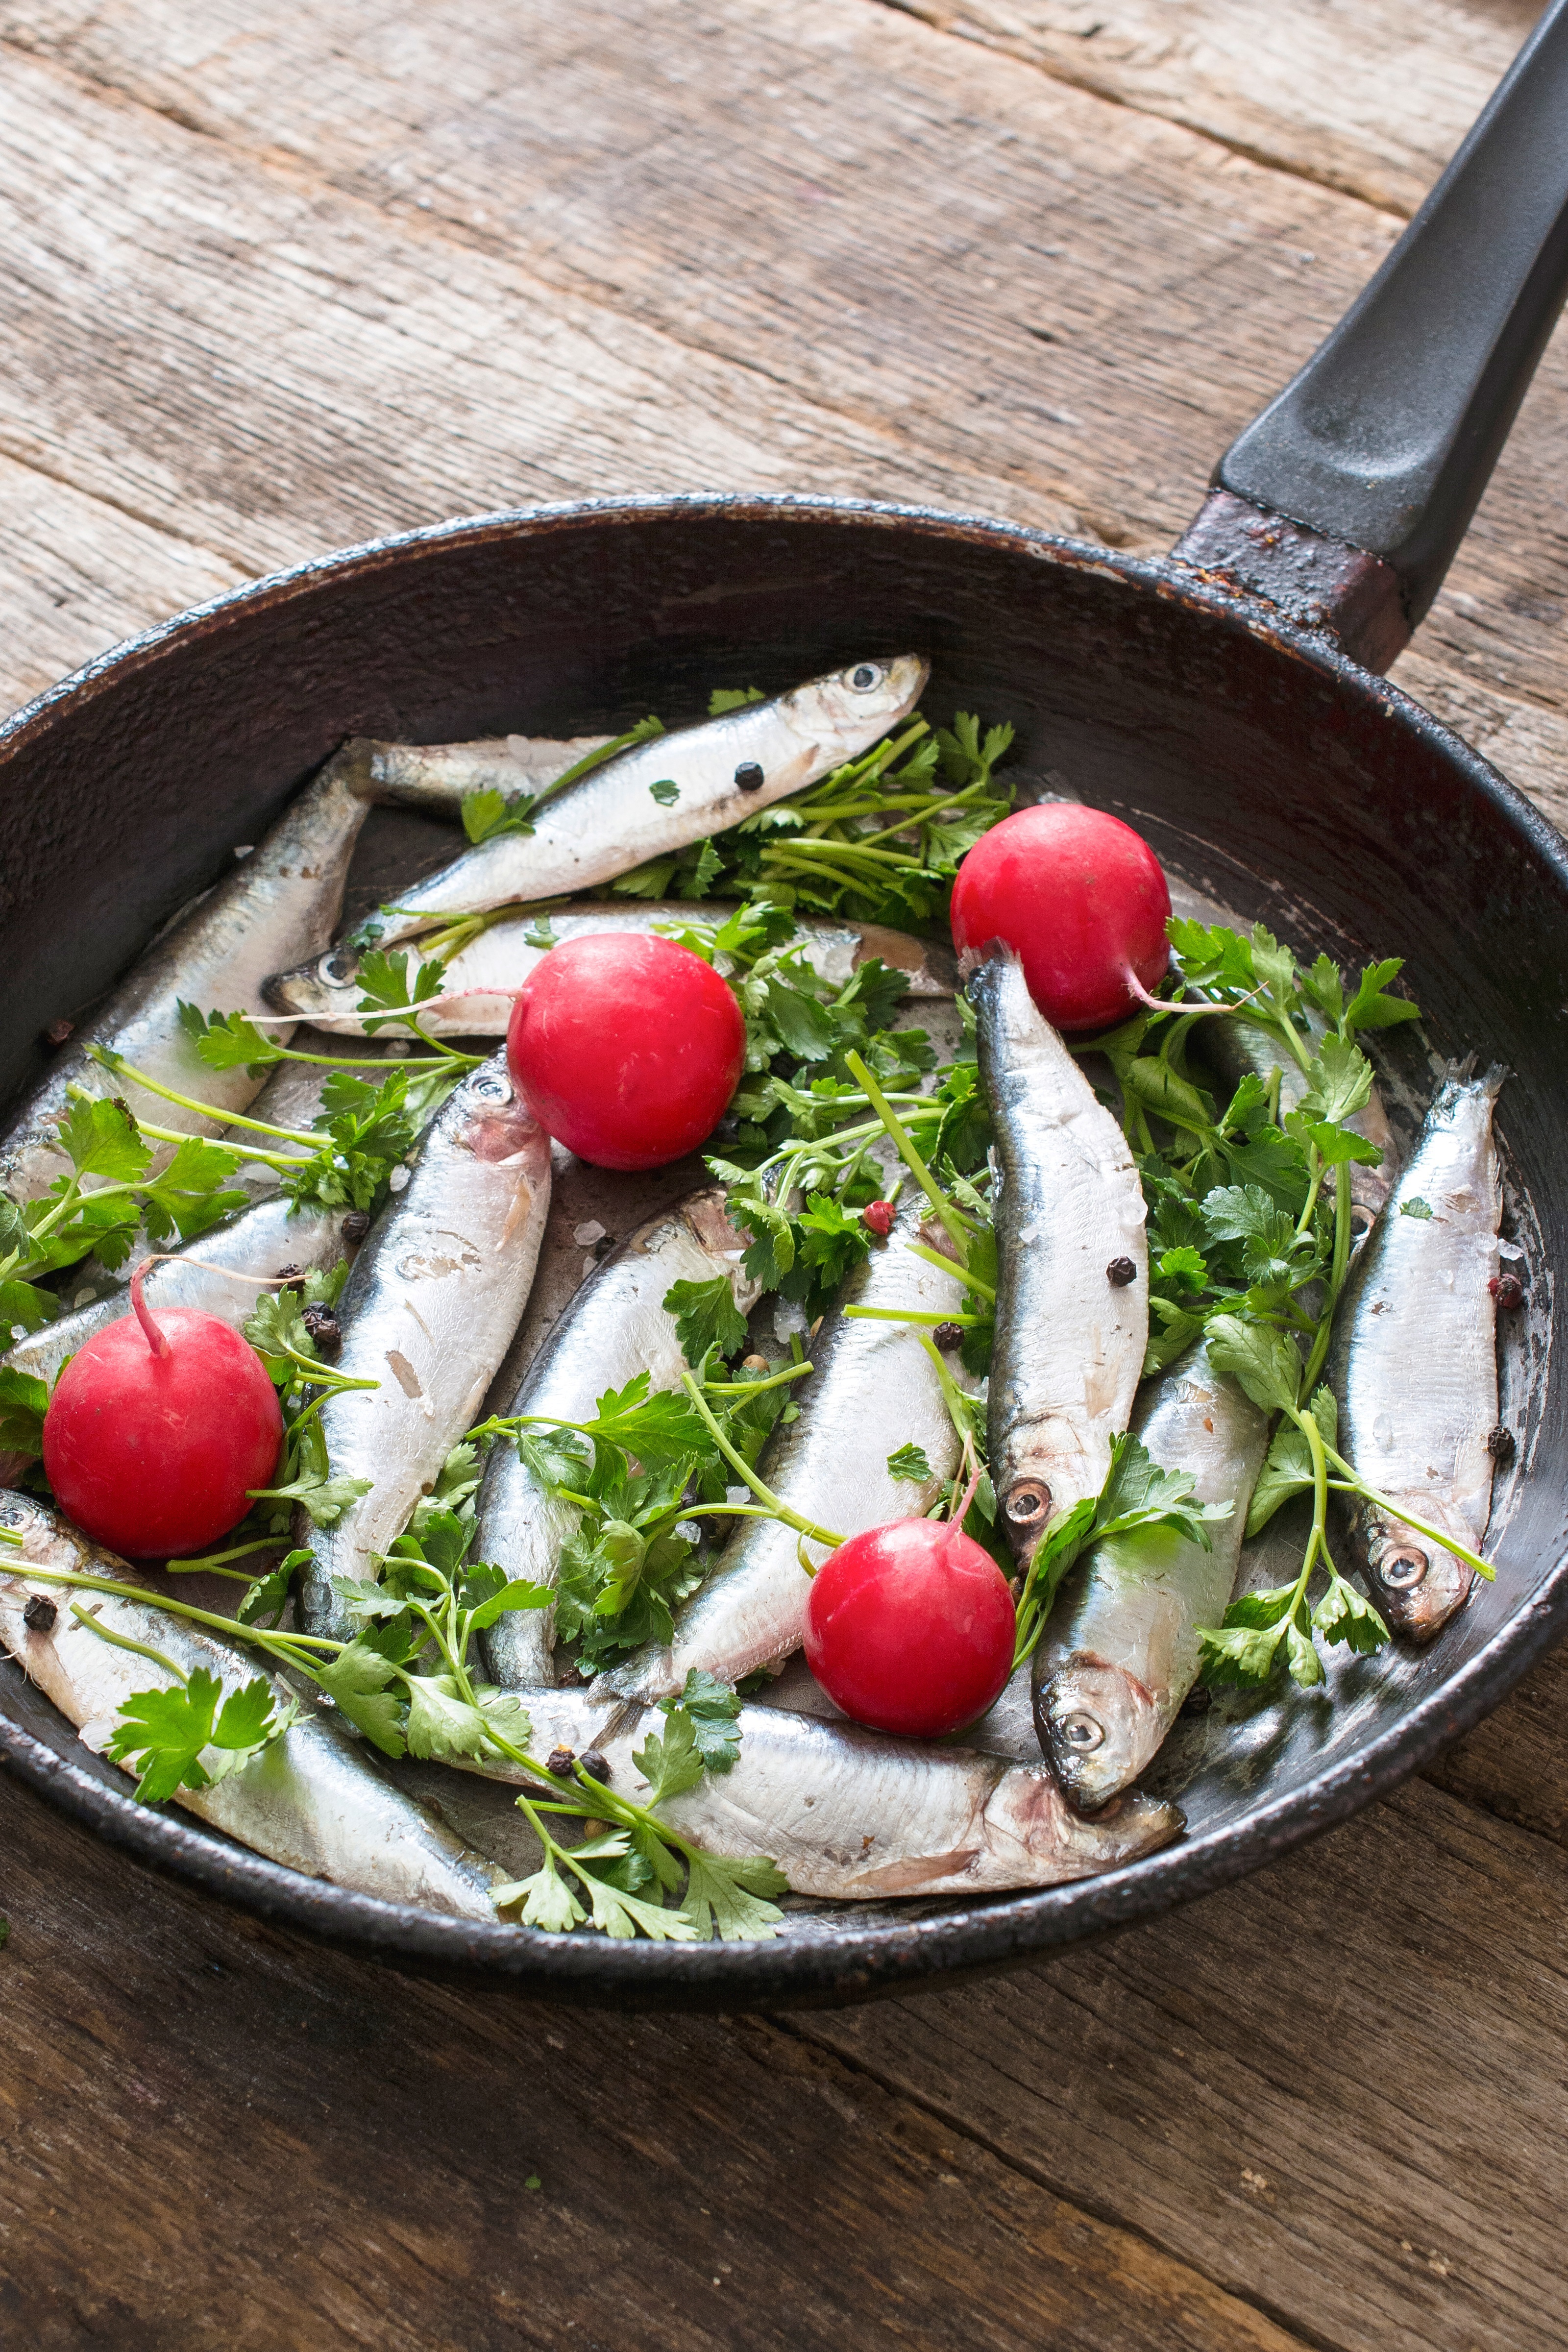 Más sardinas, menos diabetes